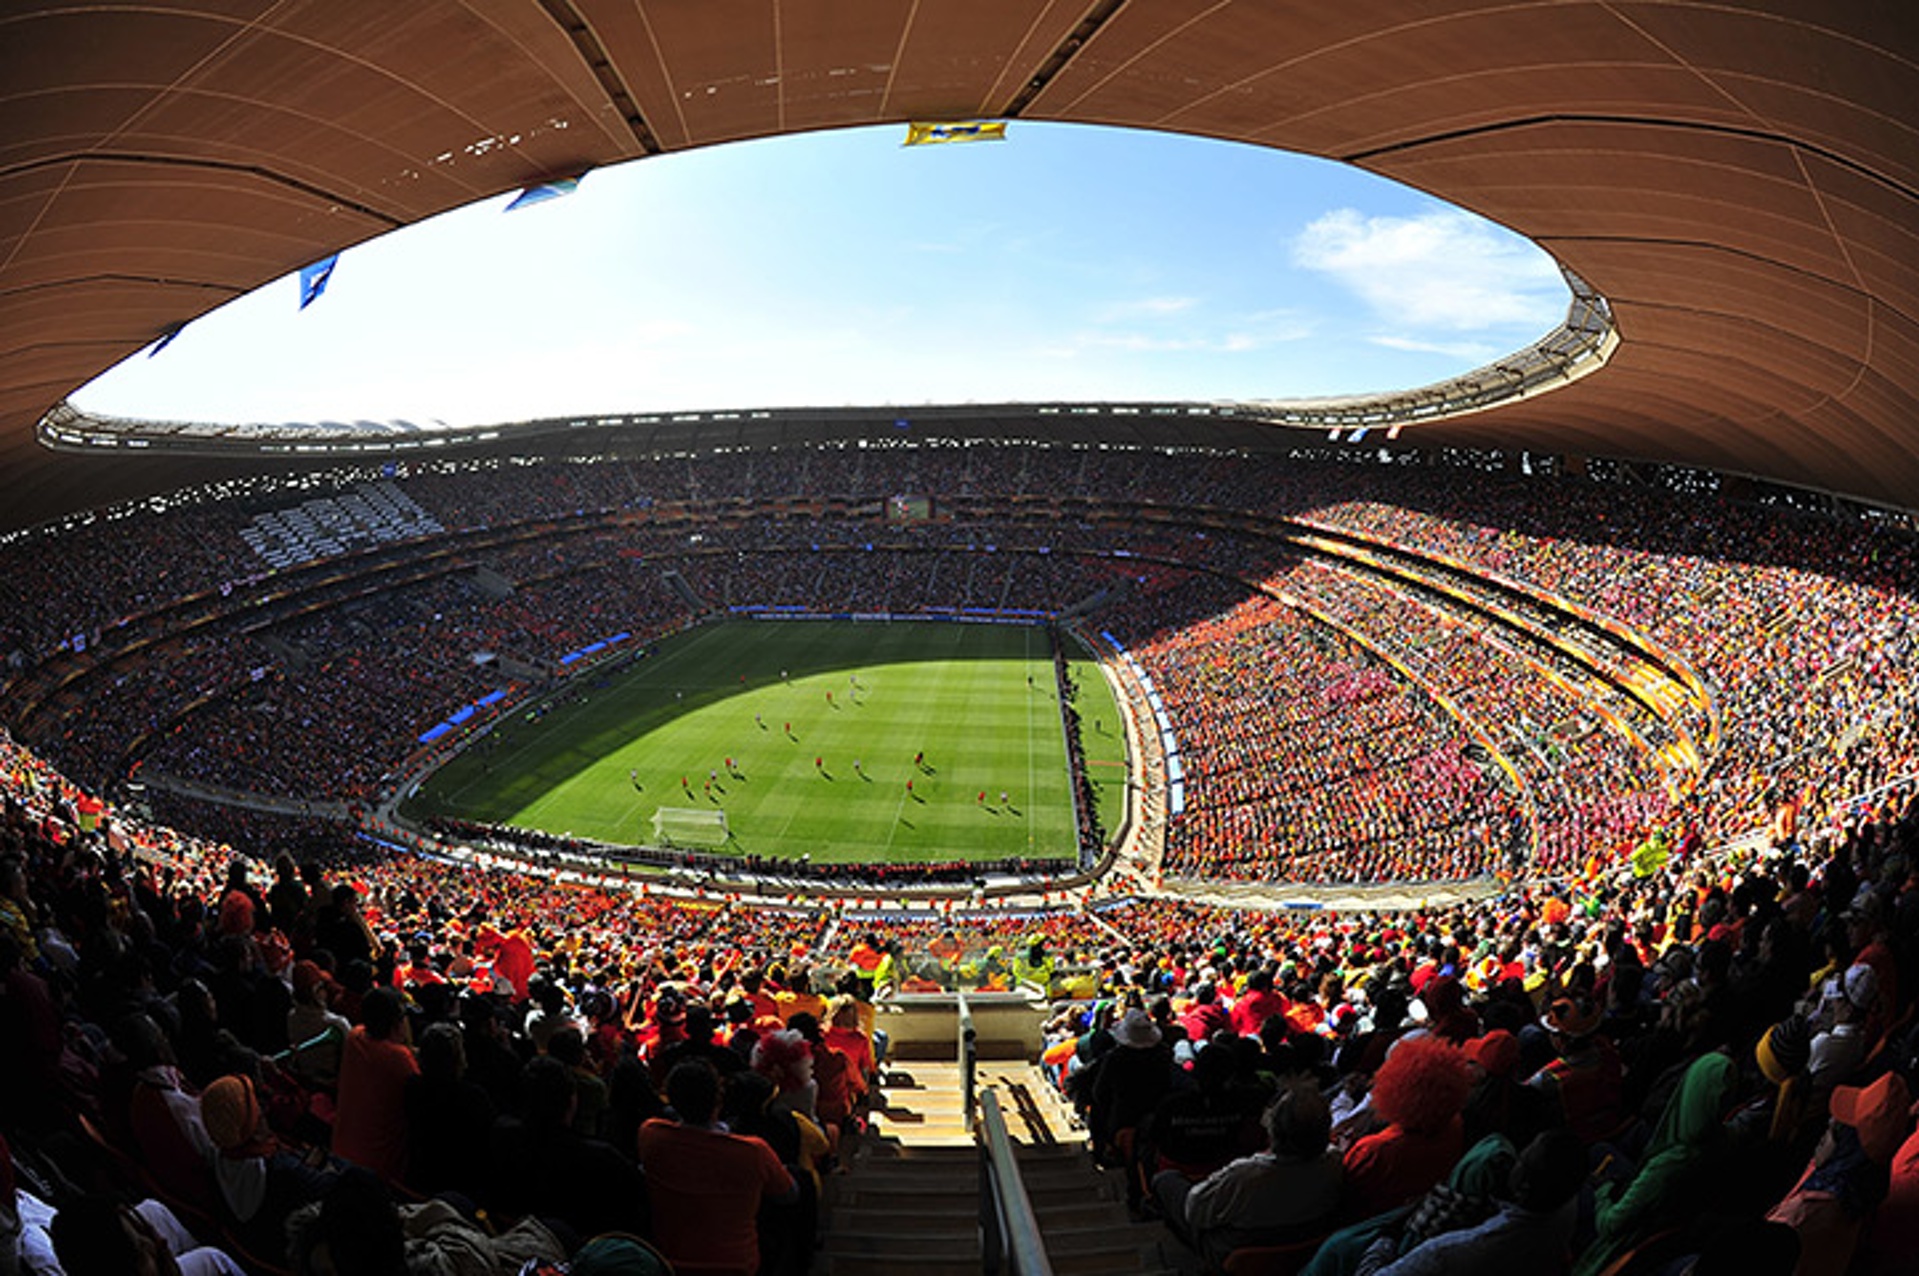 Stadium 7. Стадион СОККЕР Сити Йоханнесбург. ФНБ Стэдиум Йоханнесбург. СОККЕР Сити стадион ЮАР. Стадион Роуз Боул в США.